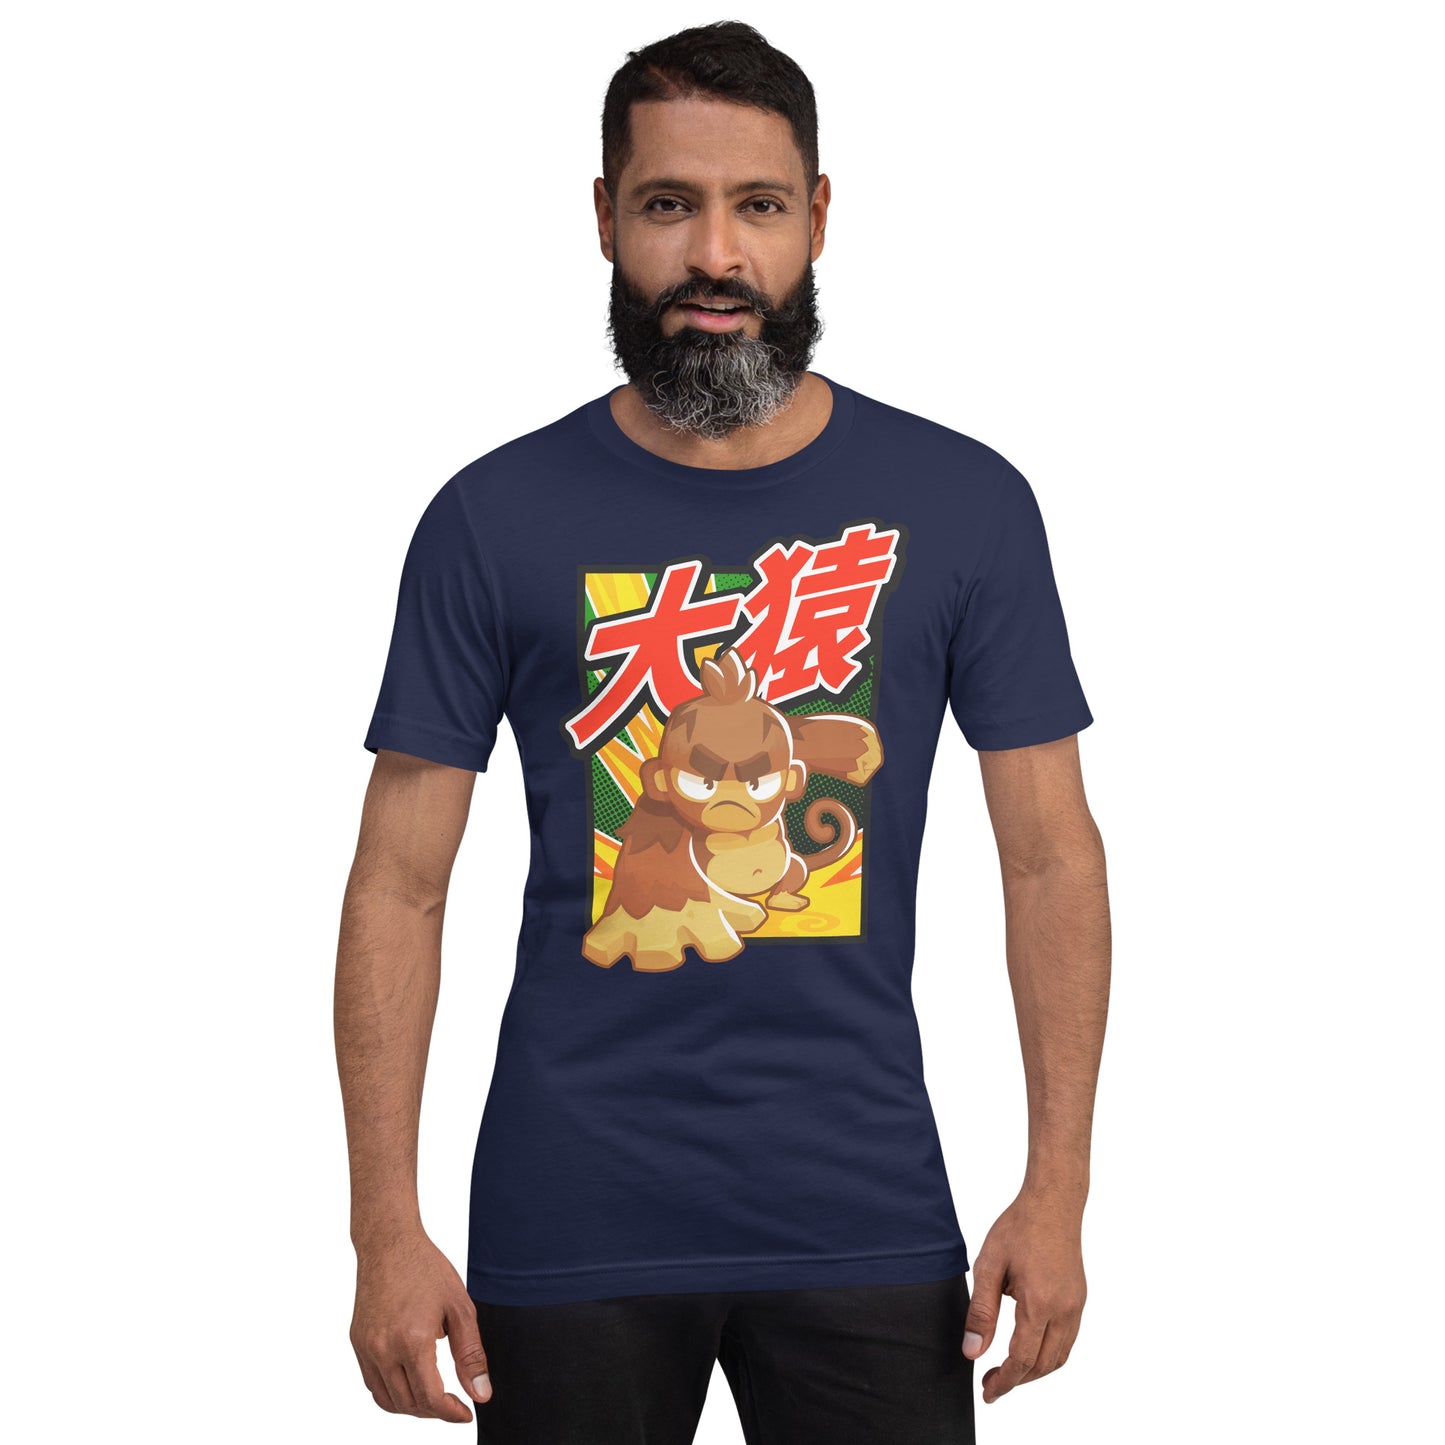 Big Monkey 大猿 Shirt (Unisex)